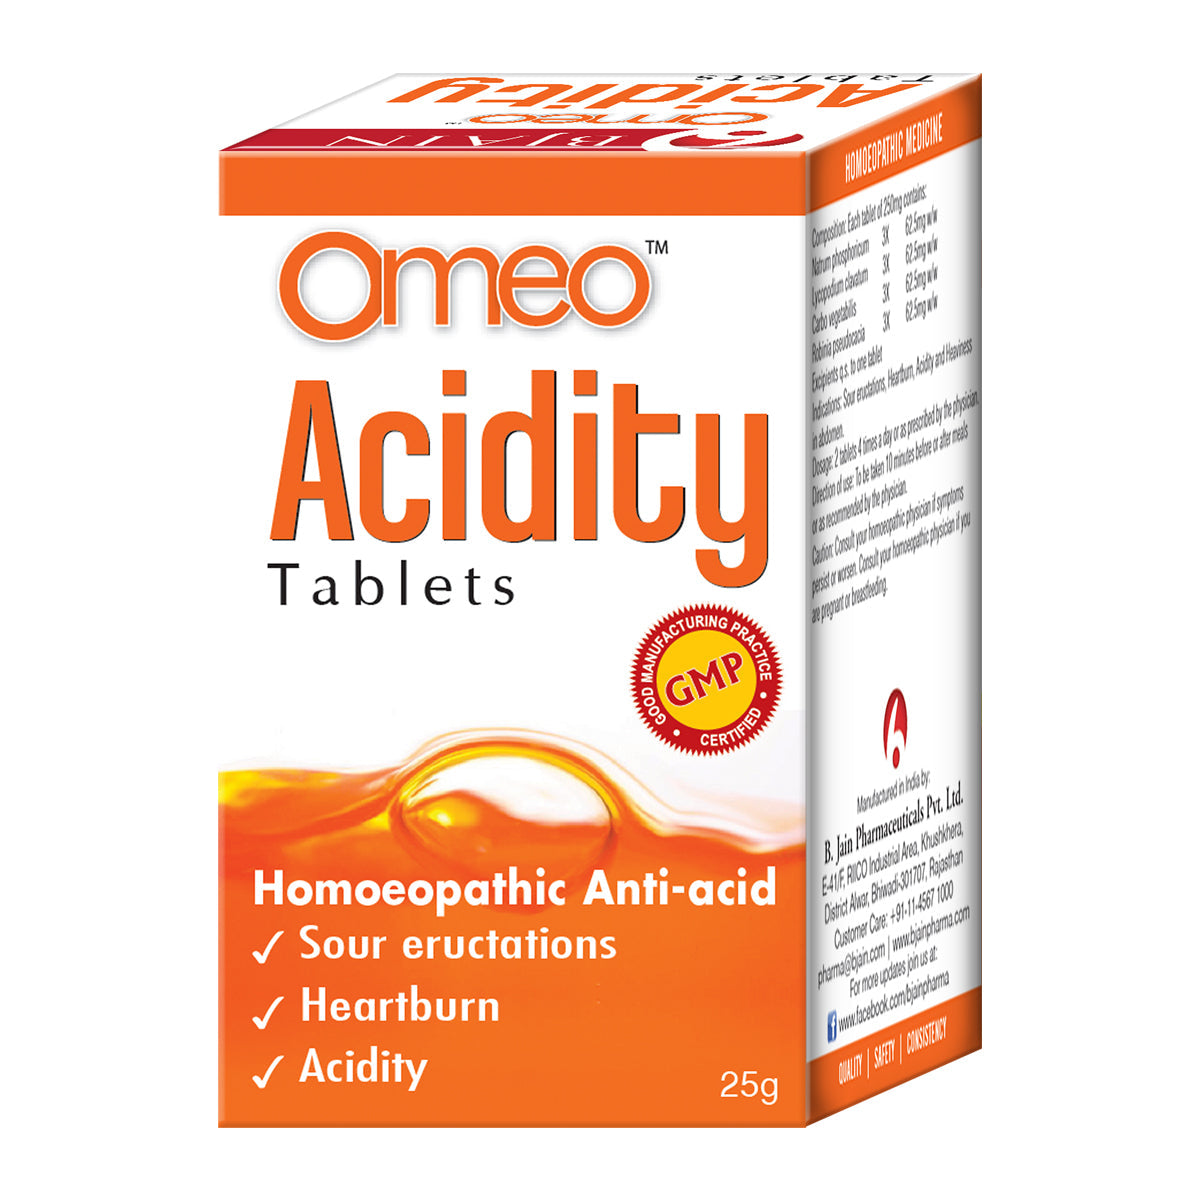 B Jain Omeo Acidity Tablets (25g) -Pack of 2 Golden-Patel & Son